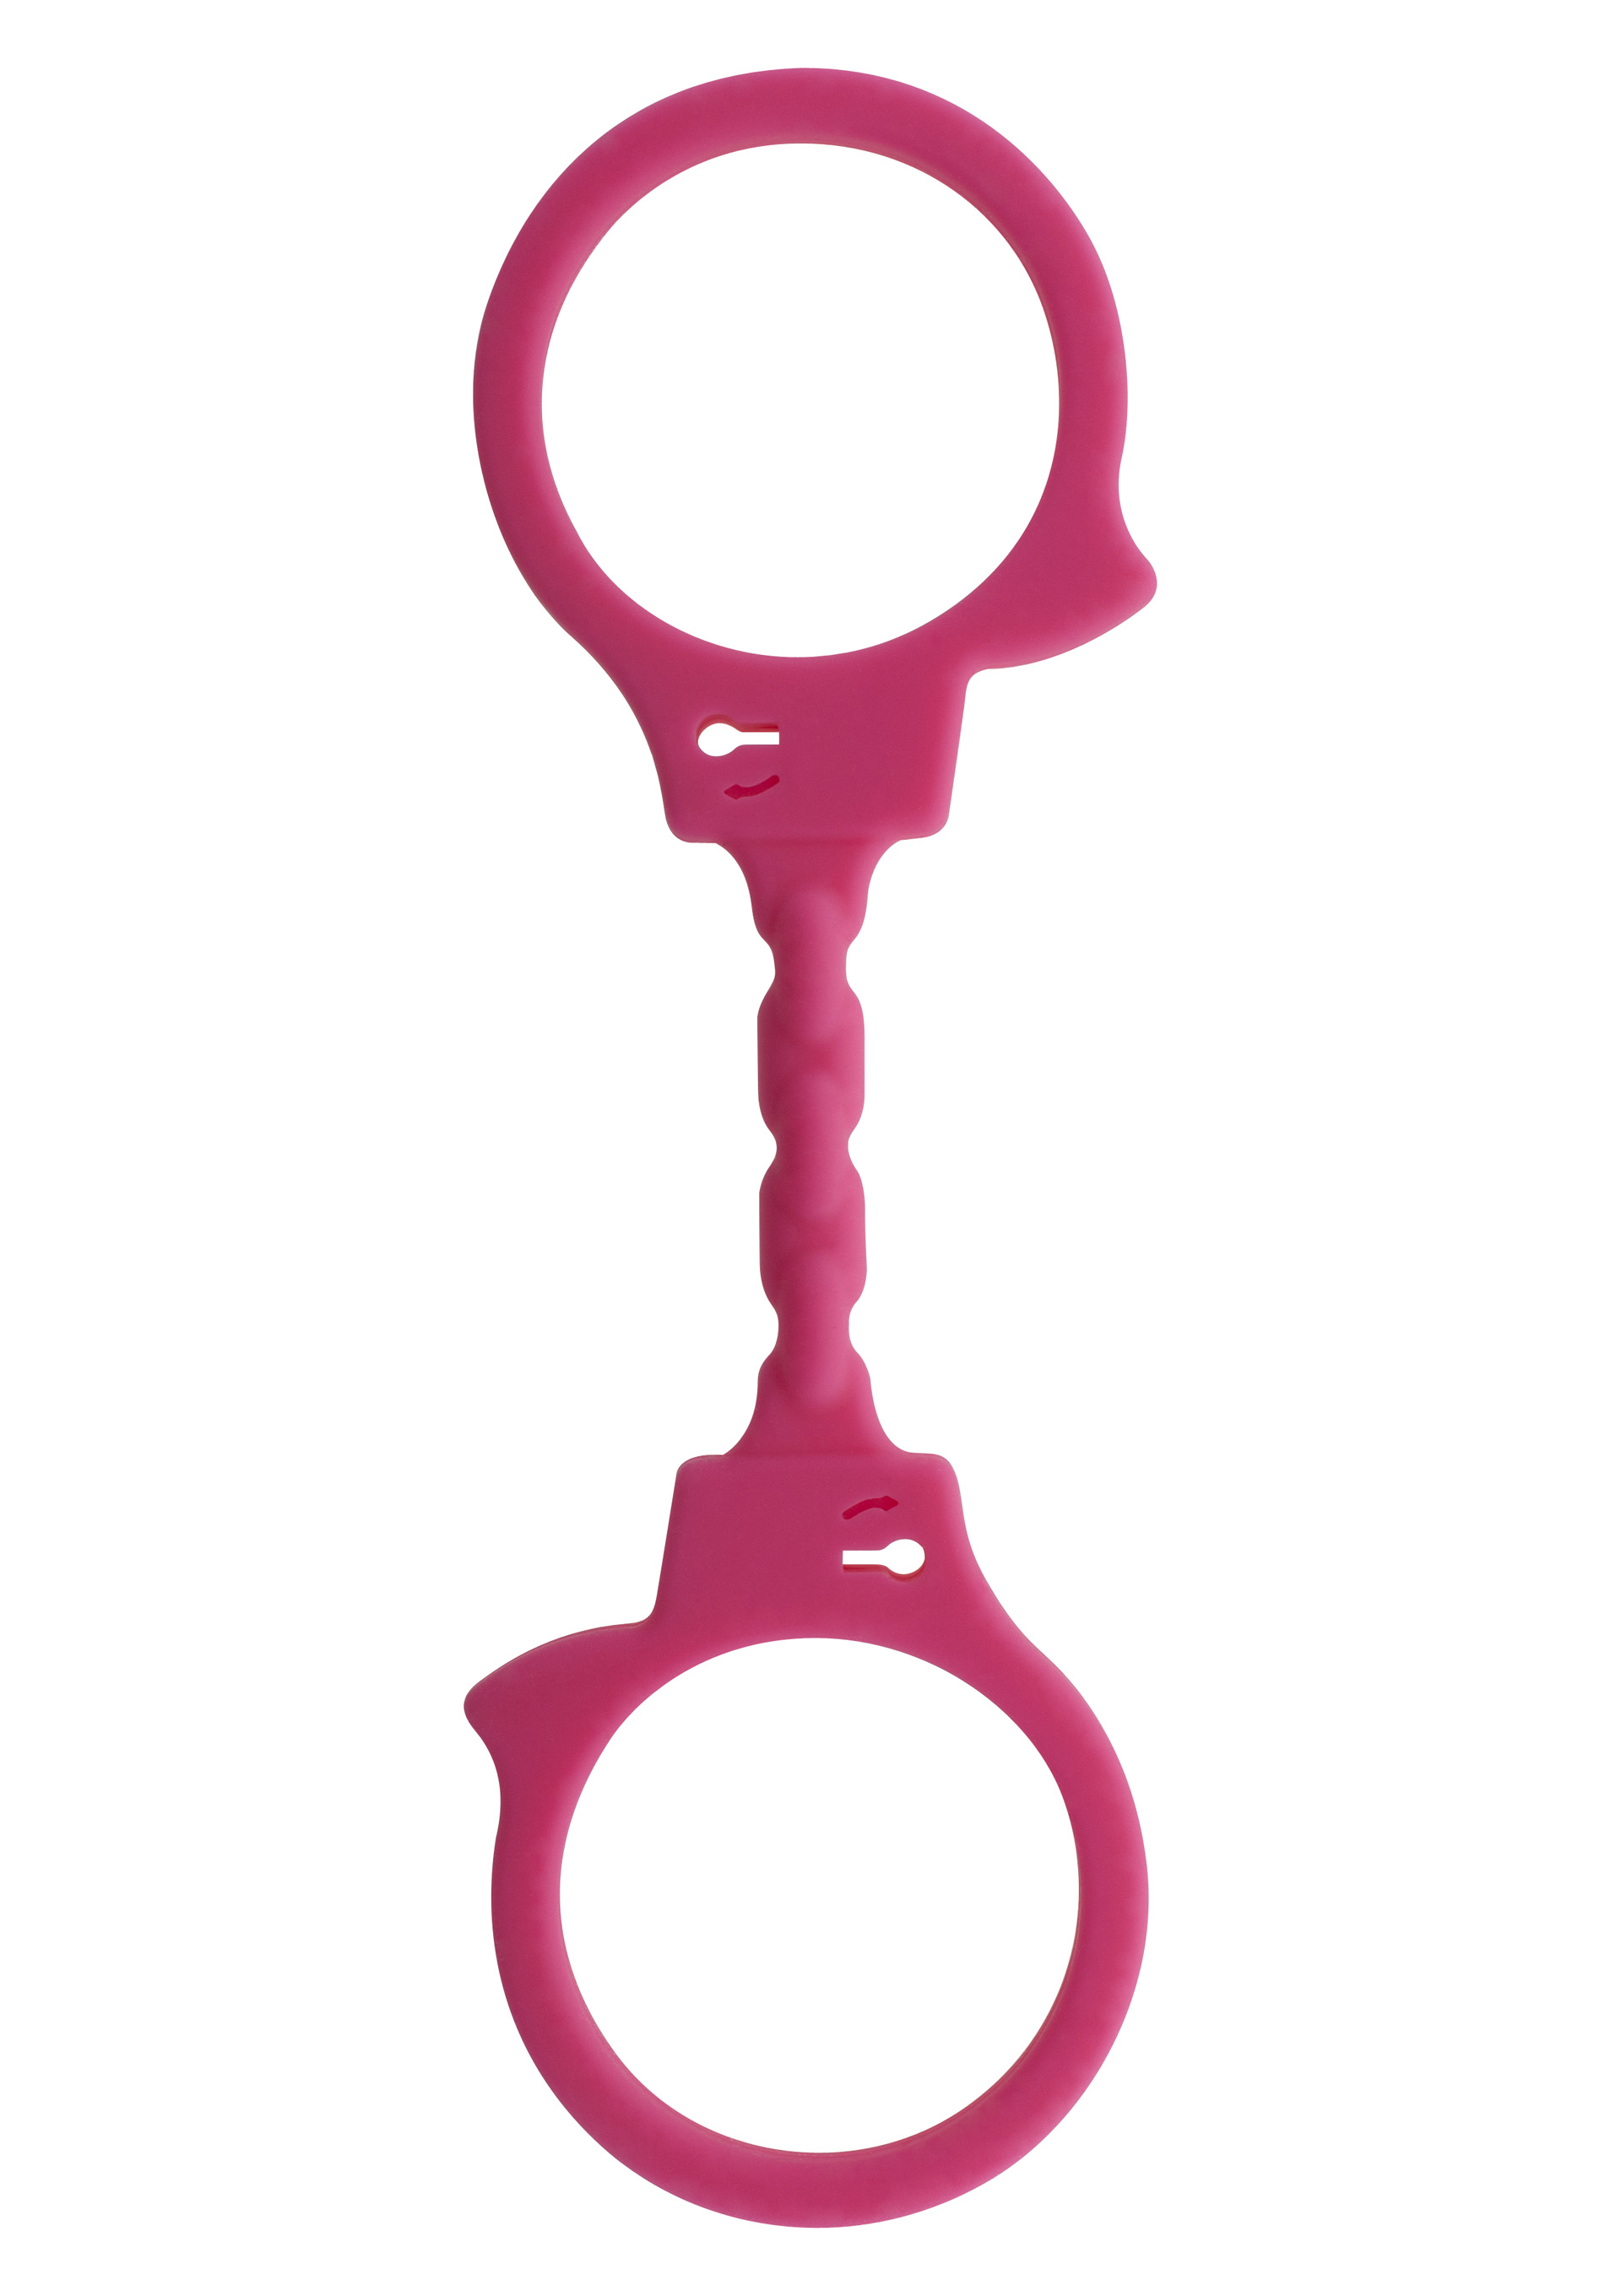 Stretchy Fun Cuffs Pink.